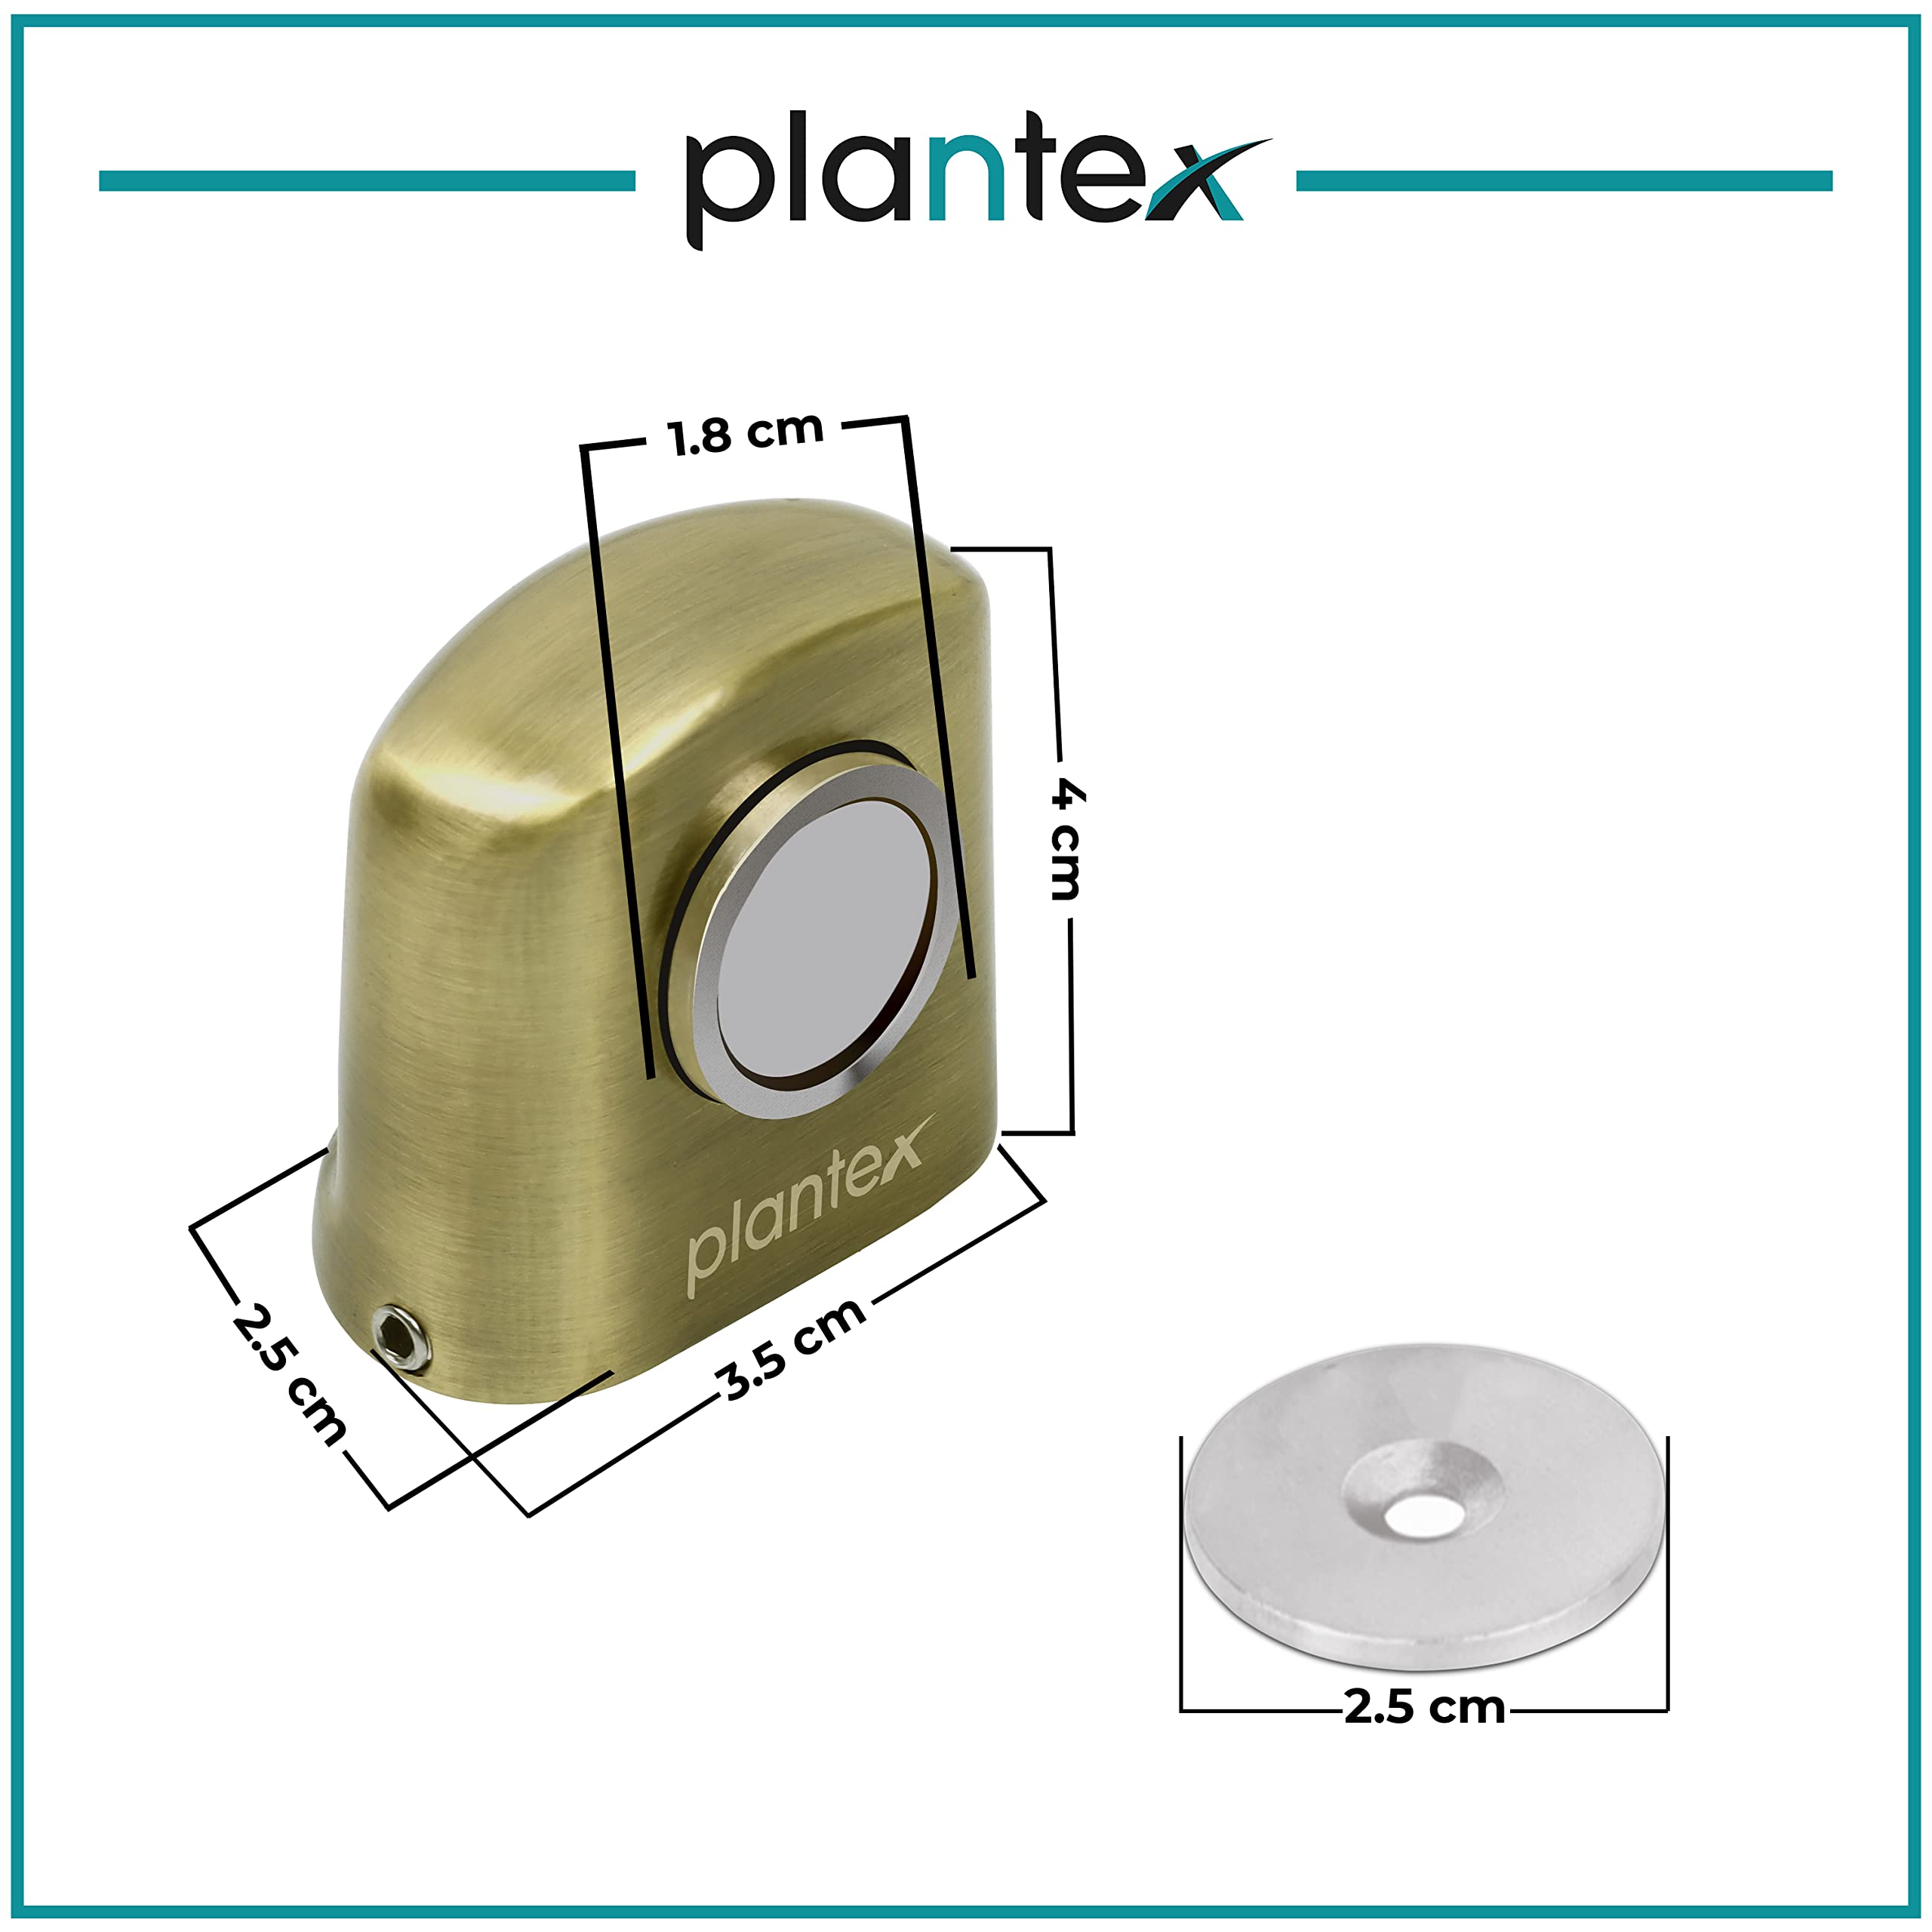 Plantex Heavy Duty Door Magnet Stopper/Door Catch Holder for Home/Office/Hotel, Floor Mounted Soft-Catcher to Hold Wooden/Glass/PVC Door - Pack of 10 (193 - Brass Antique)